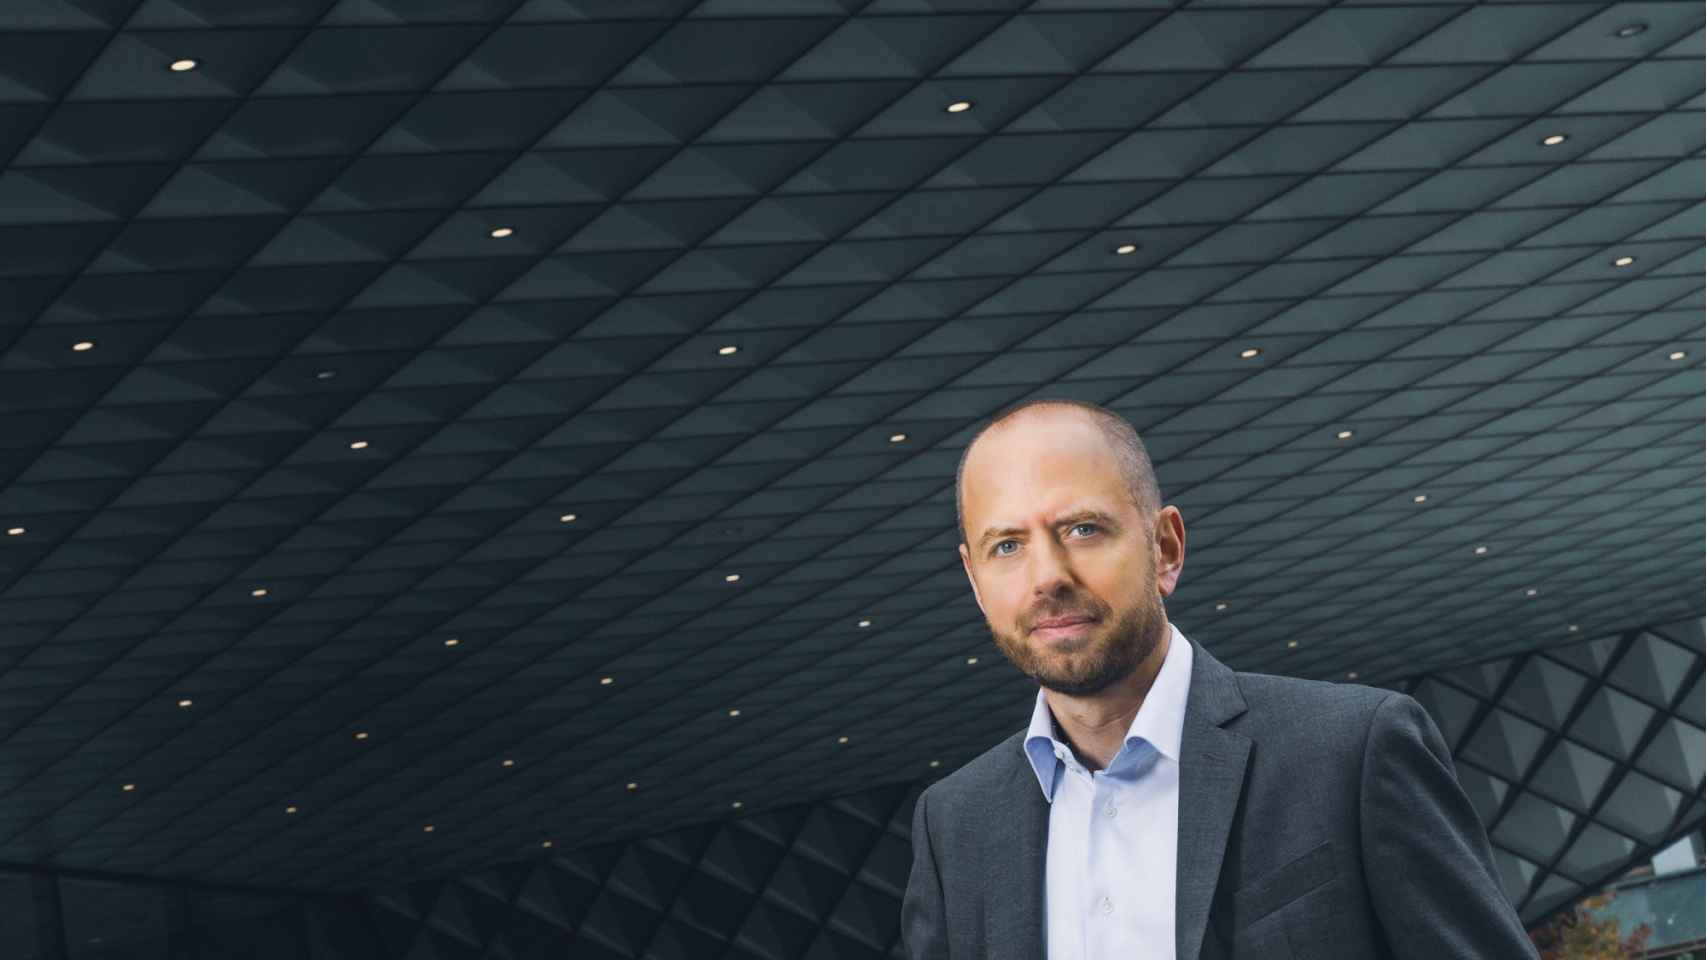 Christian Bruch, CEO de Siemens Energy, matriz de Siemens Gamesa / Siemens Energy